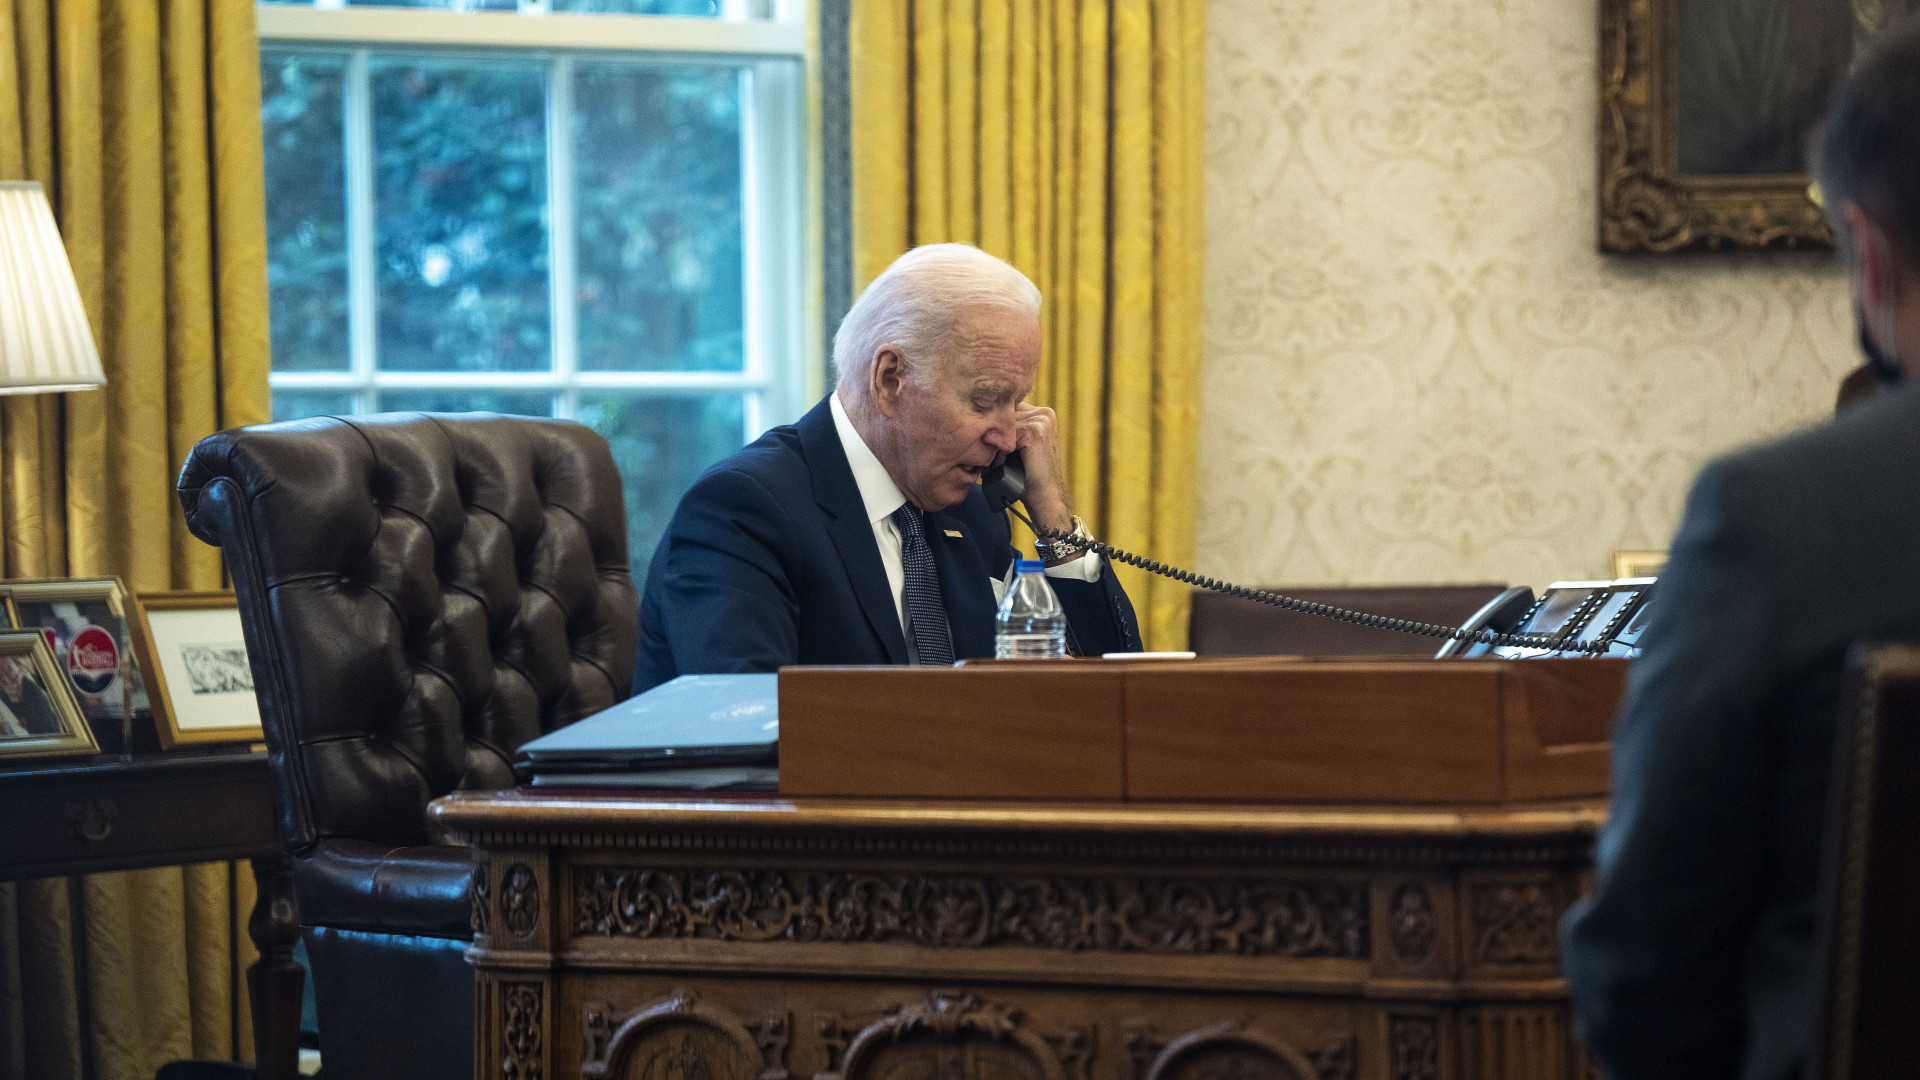 Biden spoke with Zelensky - Ukraine's president will negotiate with Putin